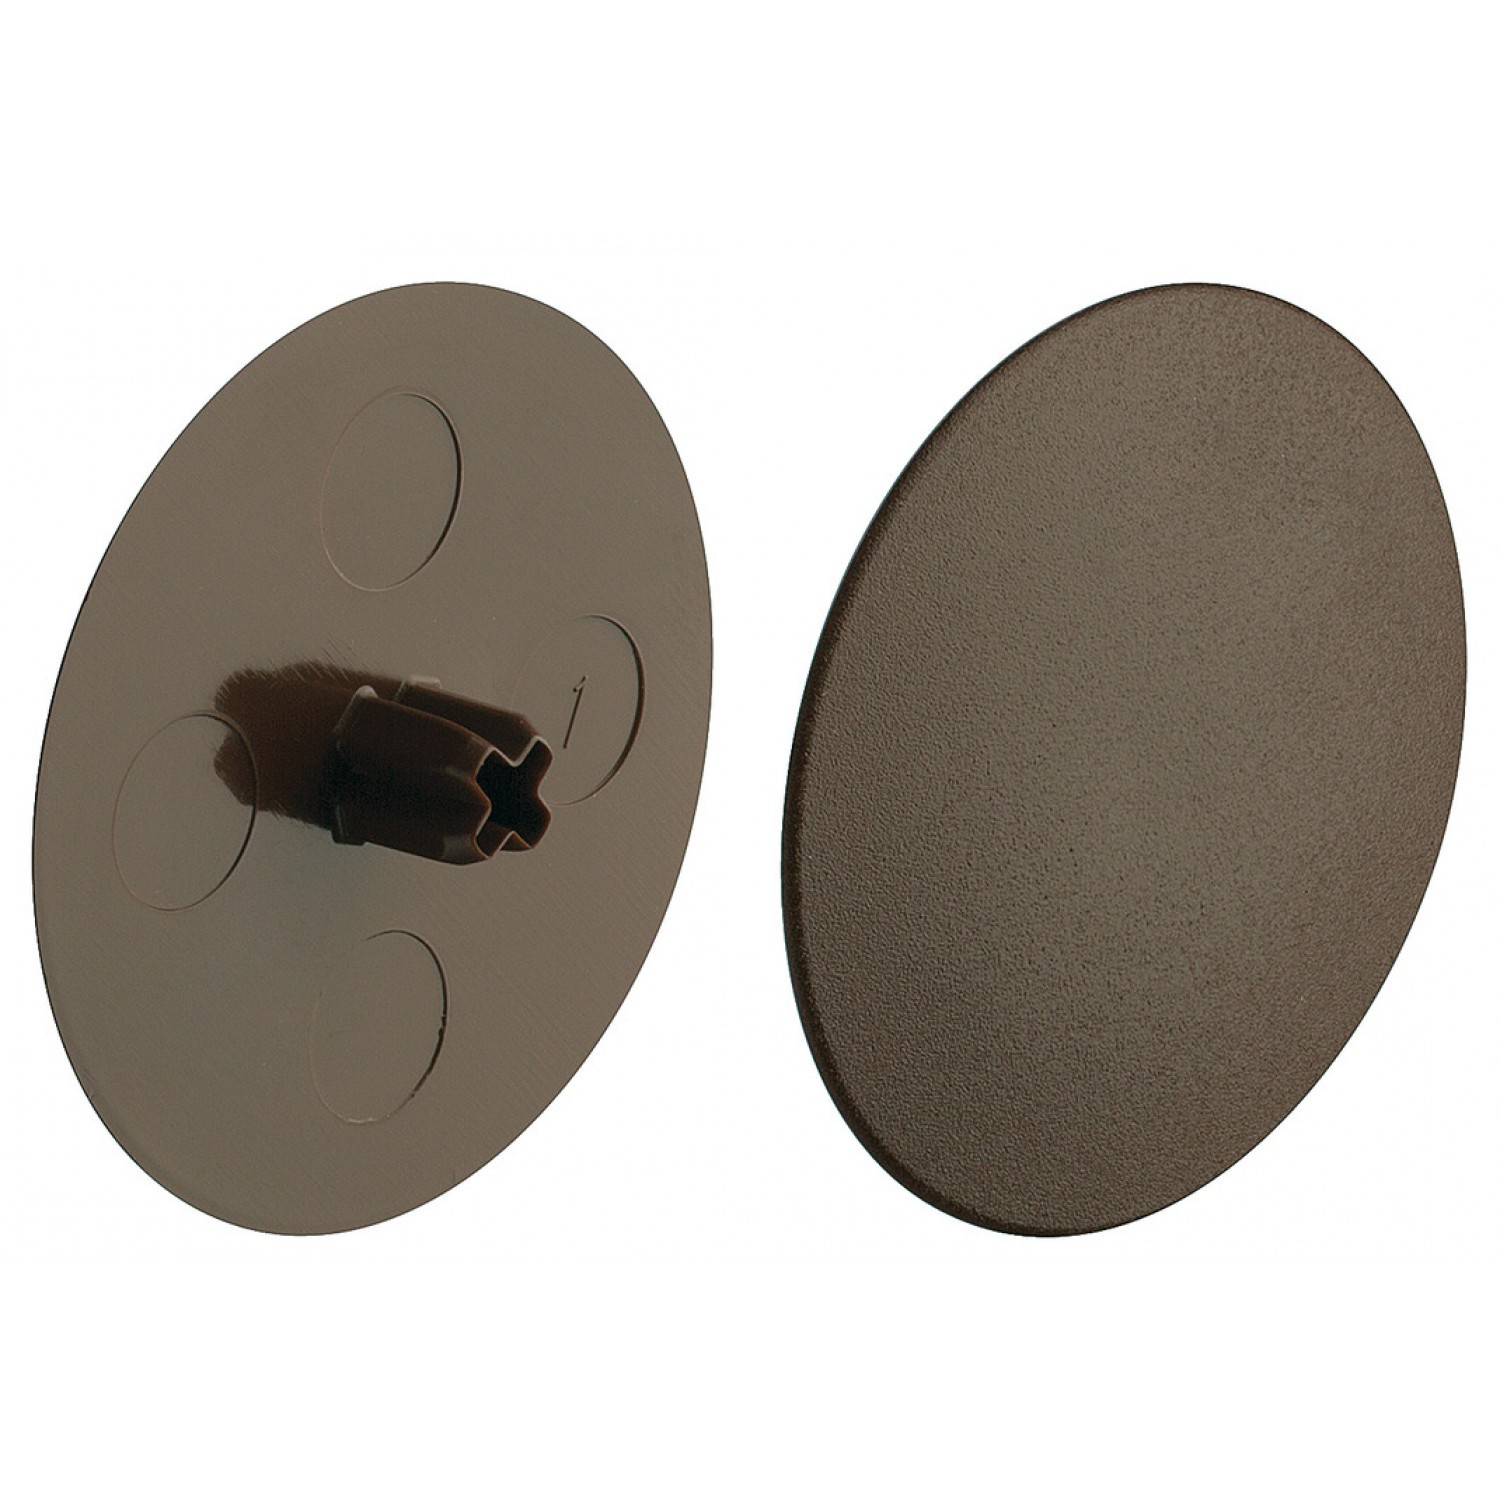 Заглушка для эксцентриковой стяжки MAXI FIX, D39 мм коричневая, CF136PMA - фото